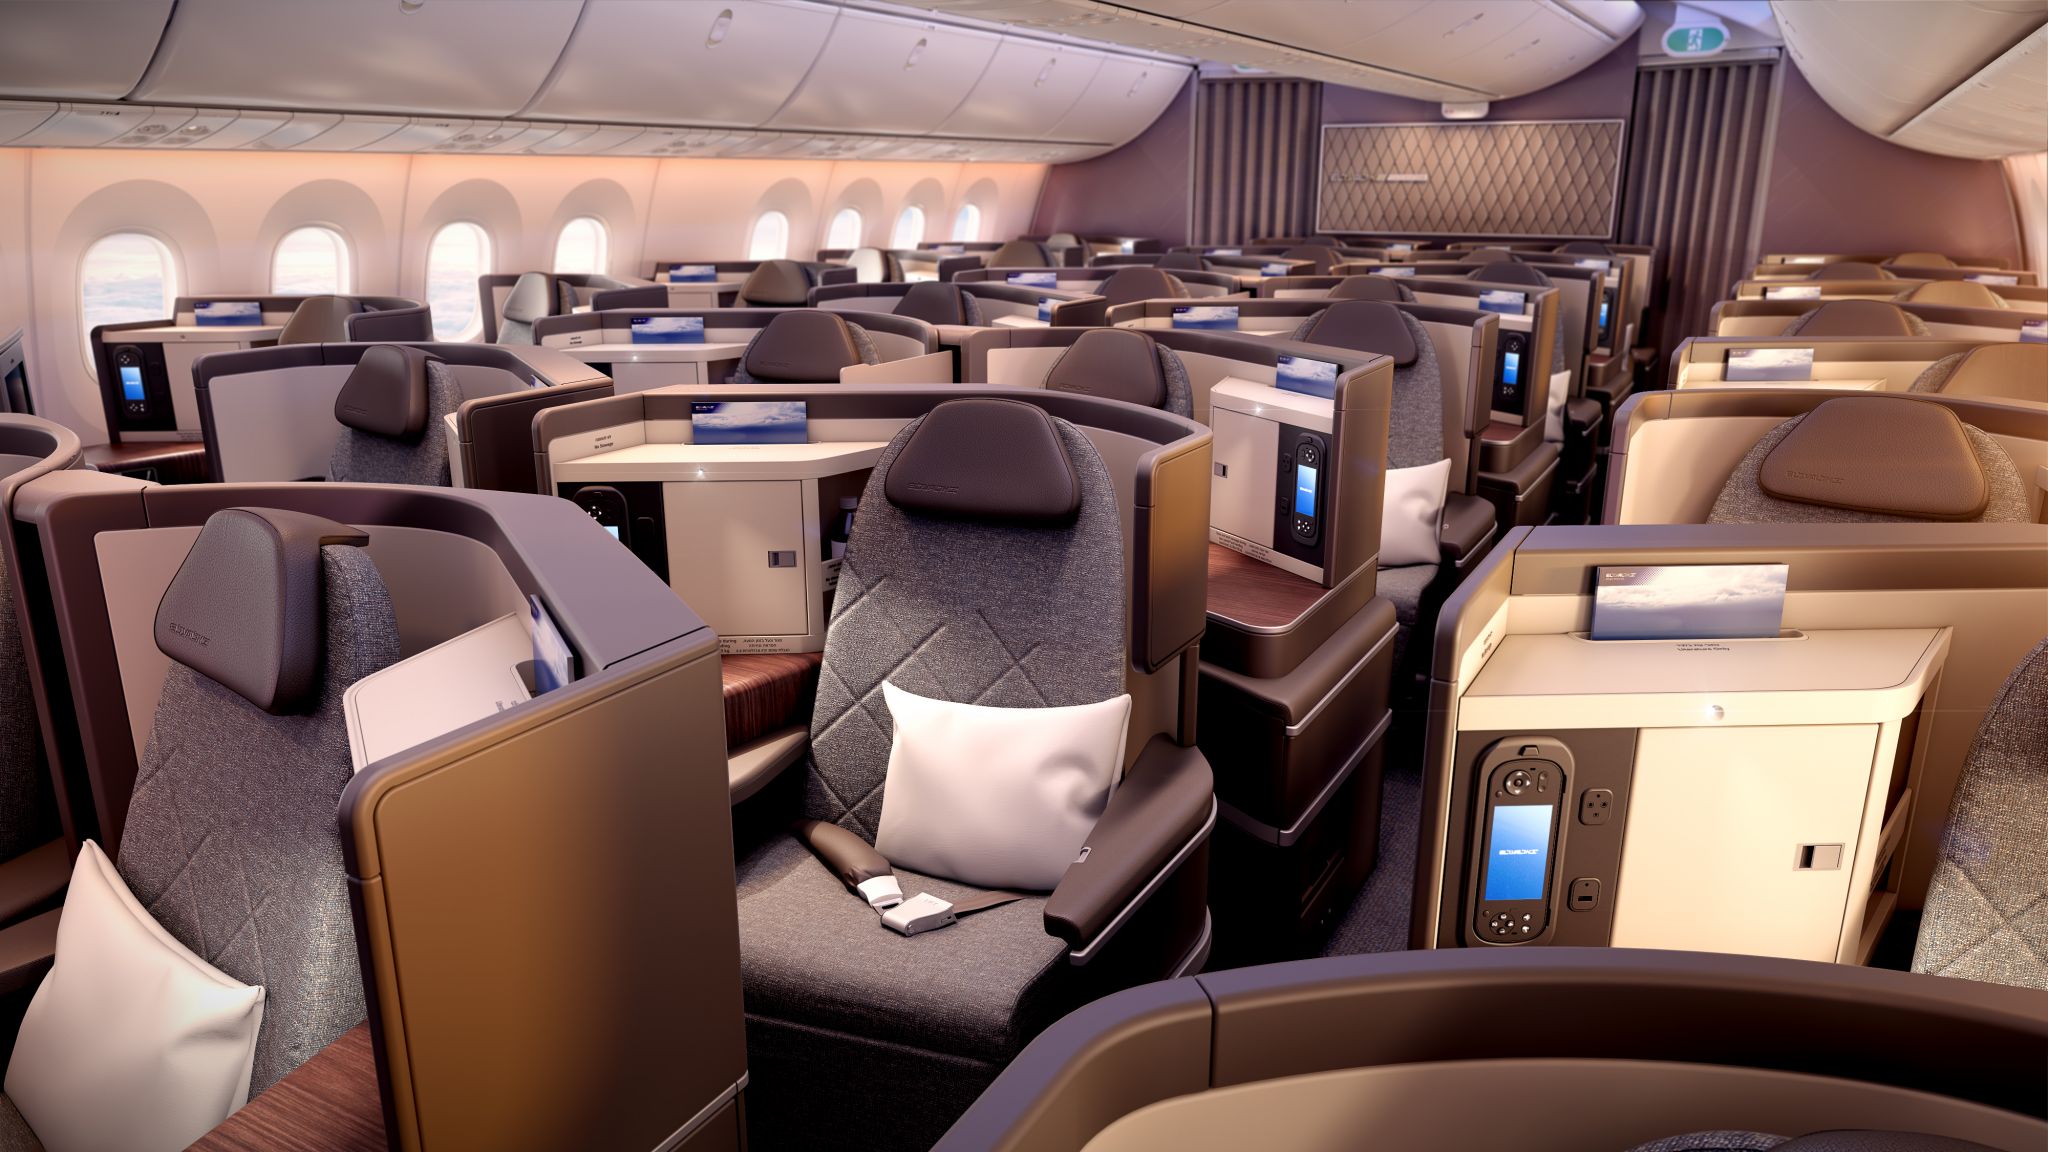 Airline business. Боинг 777 Дримлайнер. Boeing 787 Dreamliner Business class. Boeing 787 Dreamliner салон. Boeing 787-9 Dreamliner American Airlines.